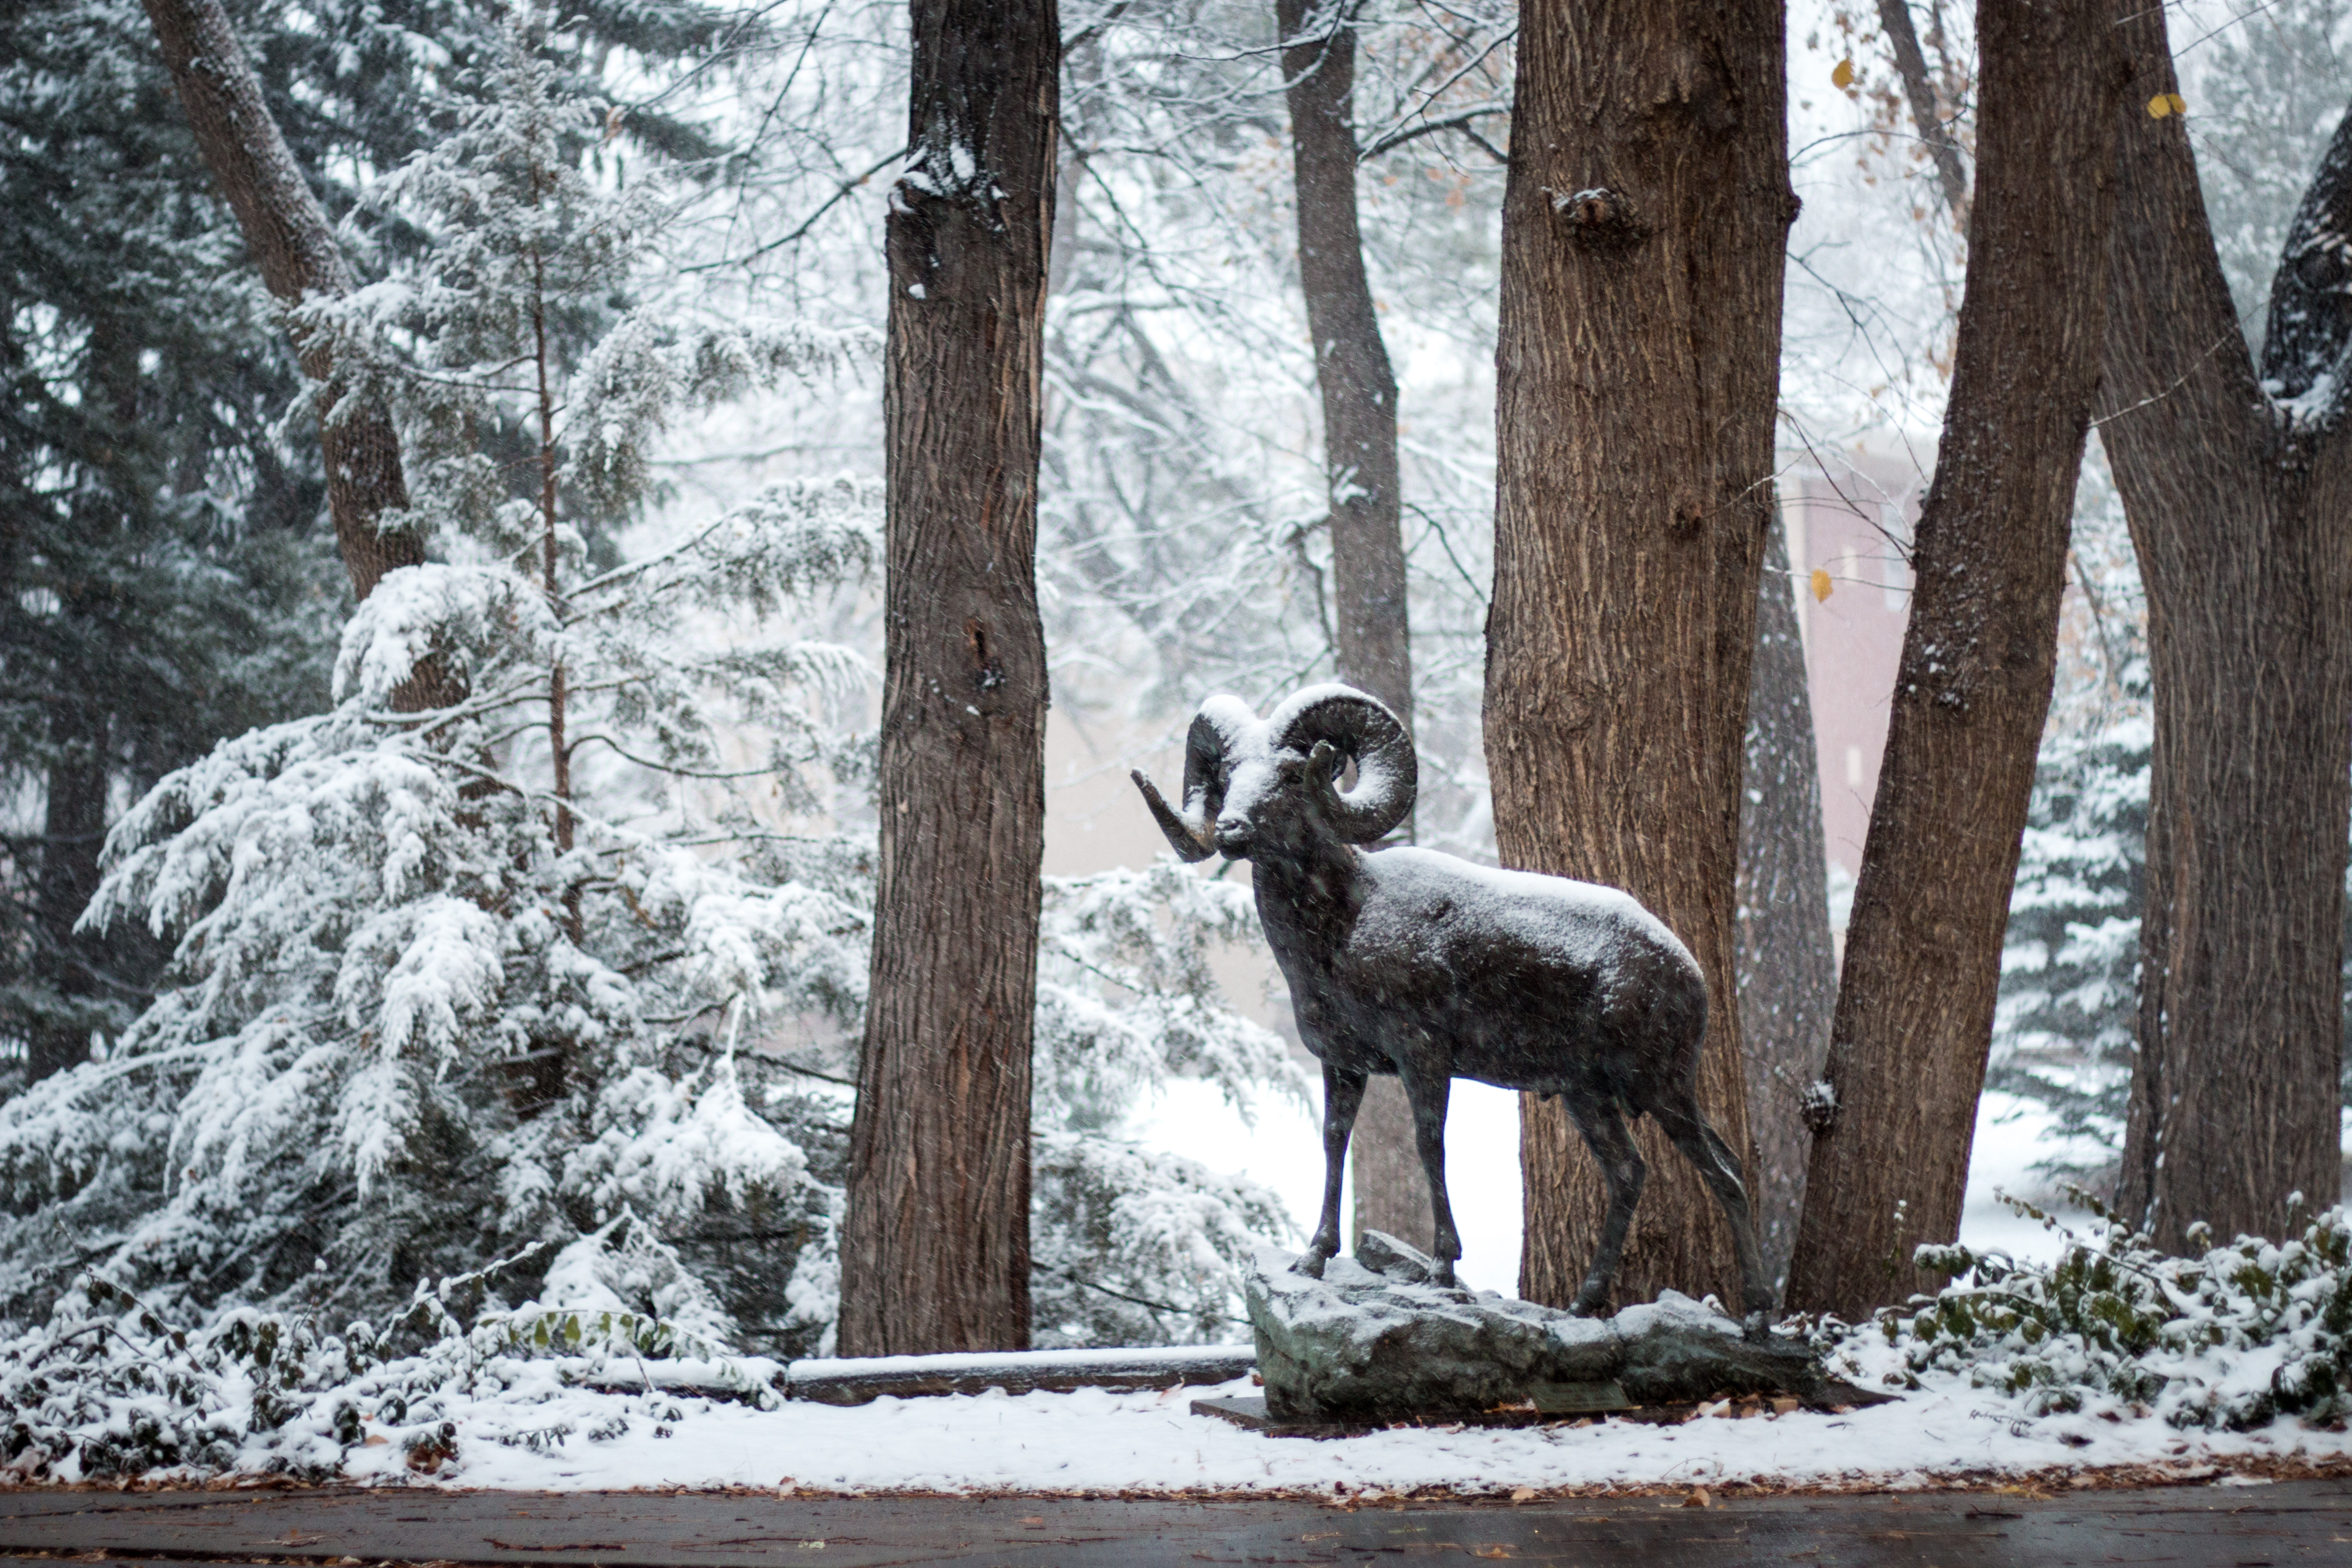 PHOTOS: First snow of the season at CSU - The Rocky Mountain Collegian